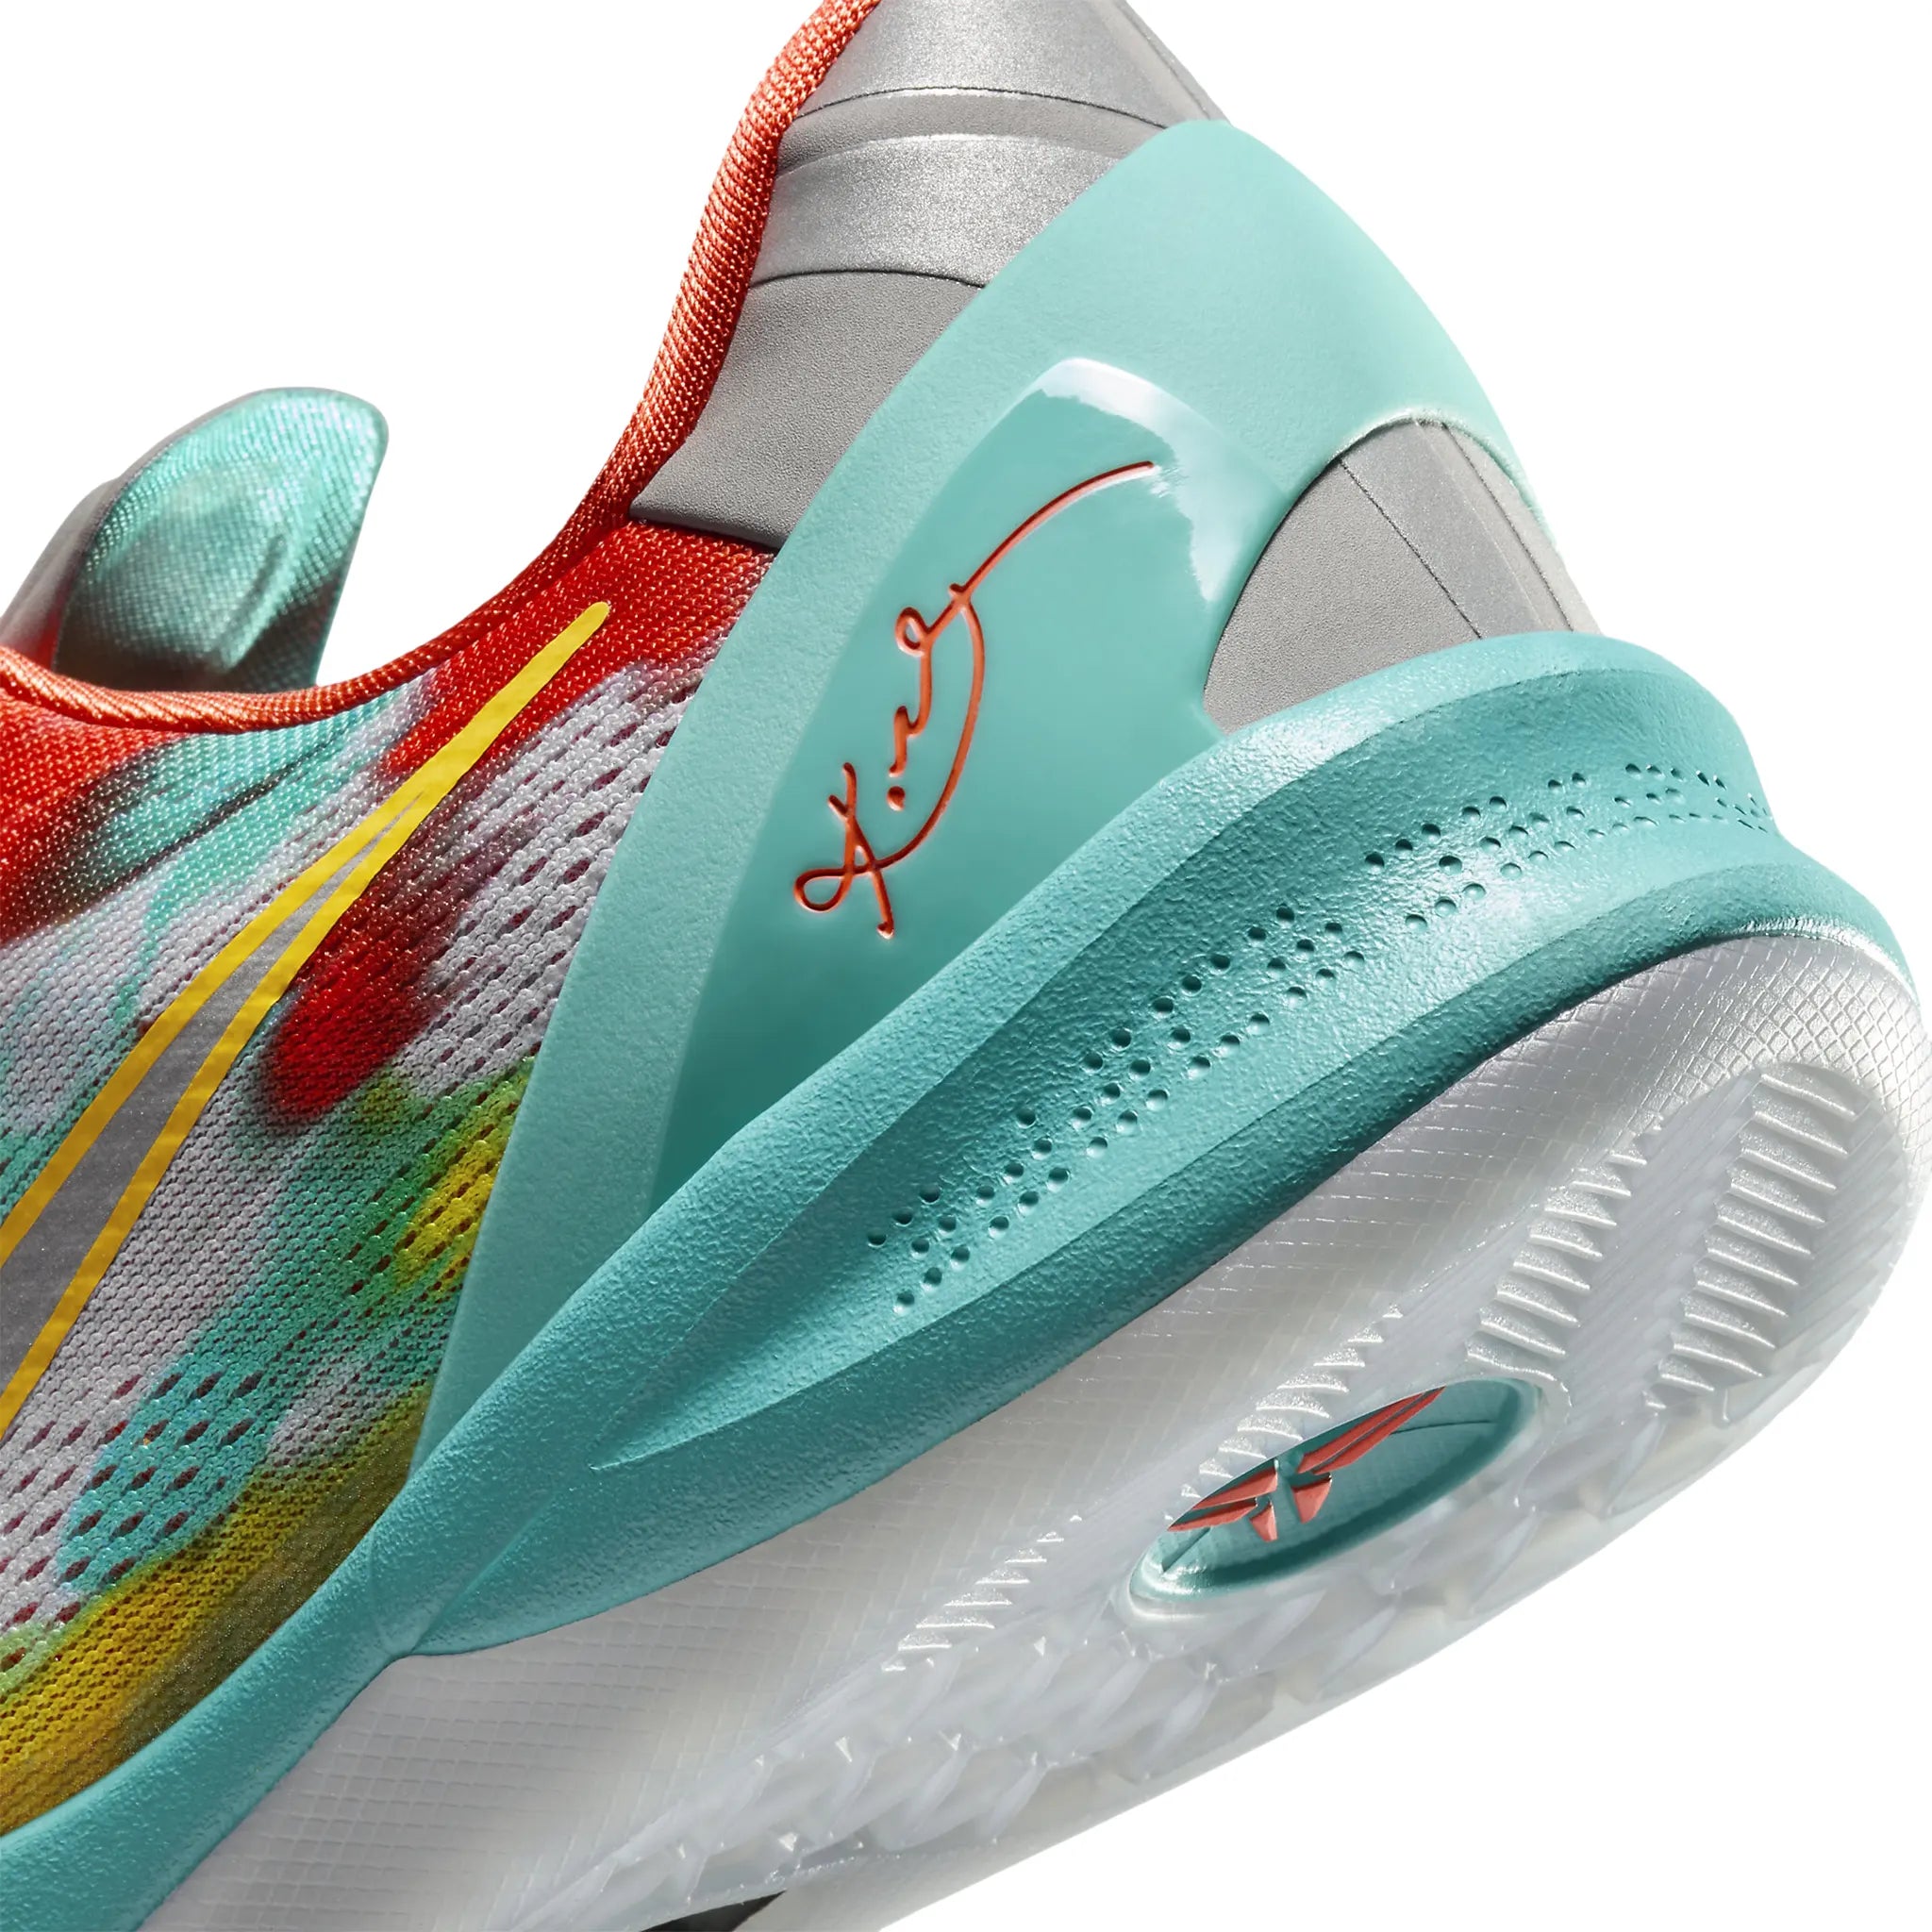 Detail view of Nike Kobe 8 Protro Venice Beach FQ3548-001